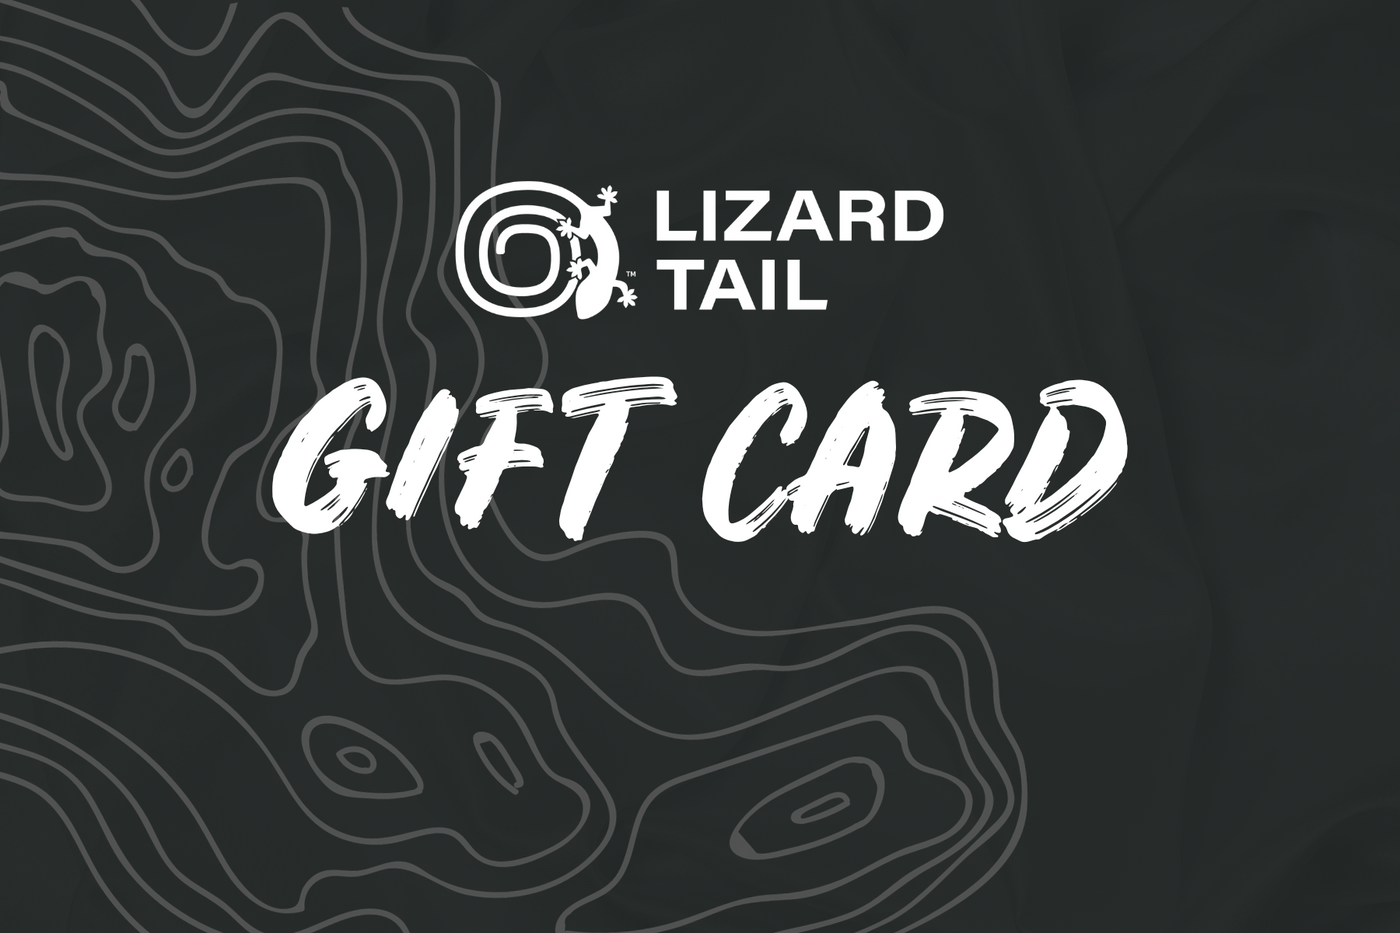 Lizard Tail Gift Card